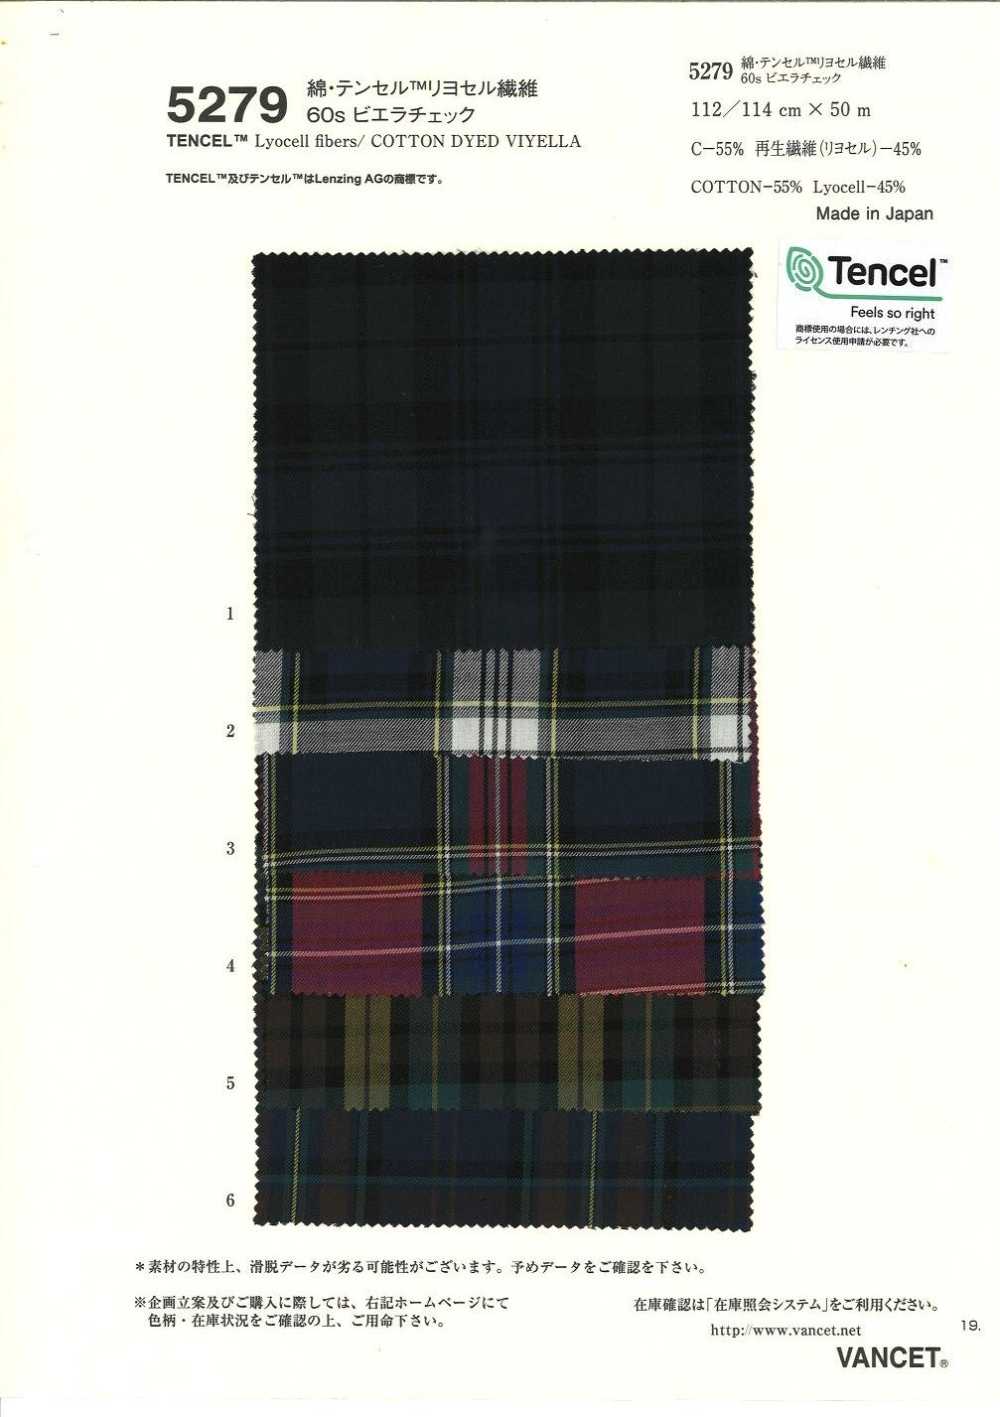 5279 C/TENCEL 60 Faden Viyella Check[Textilgewebe] VANCET